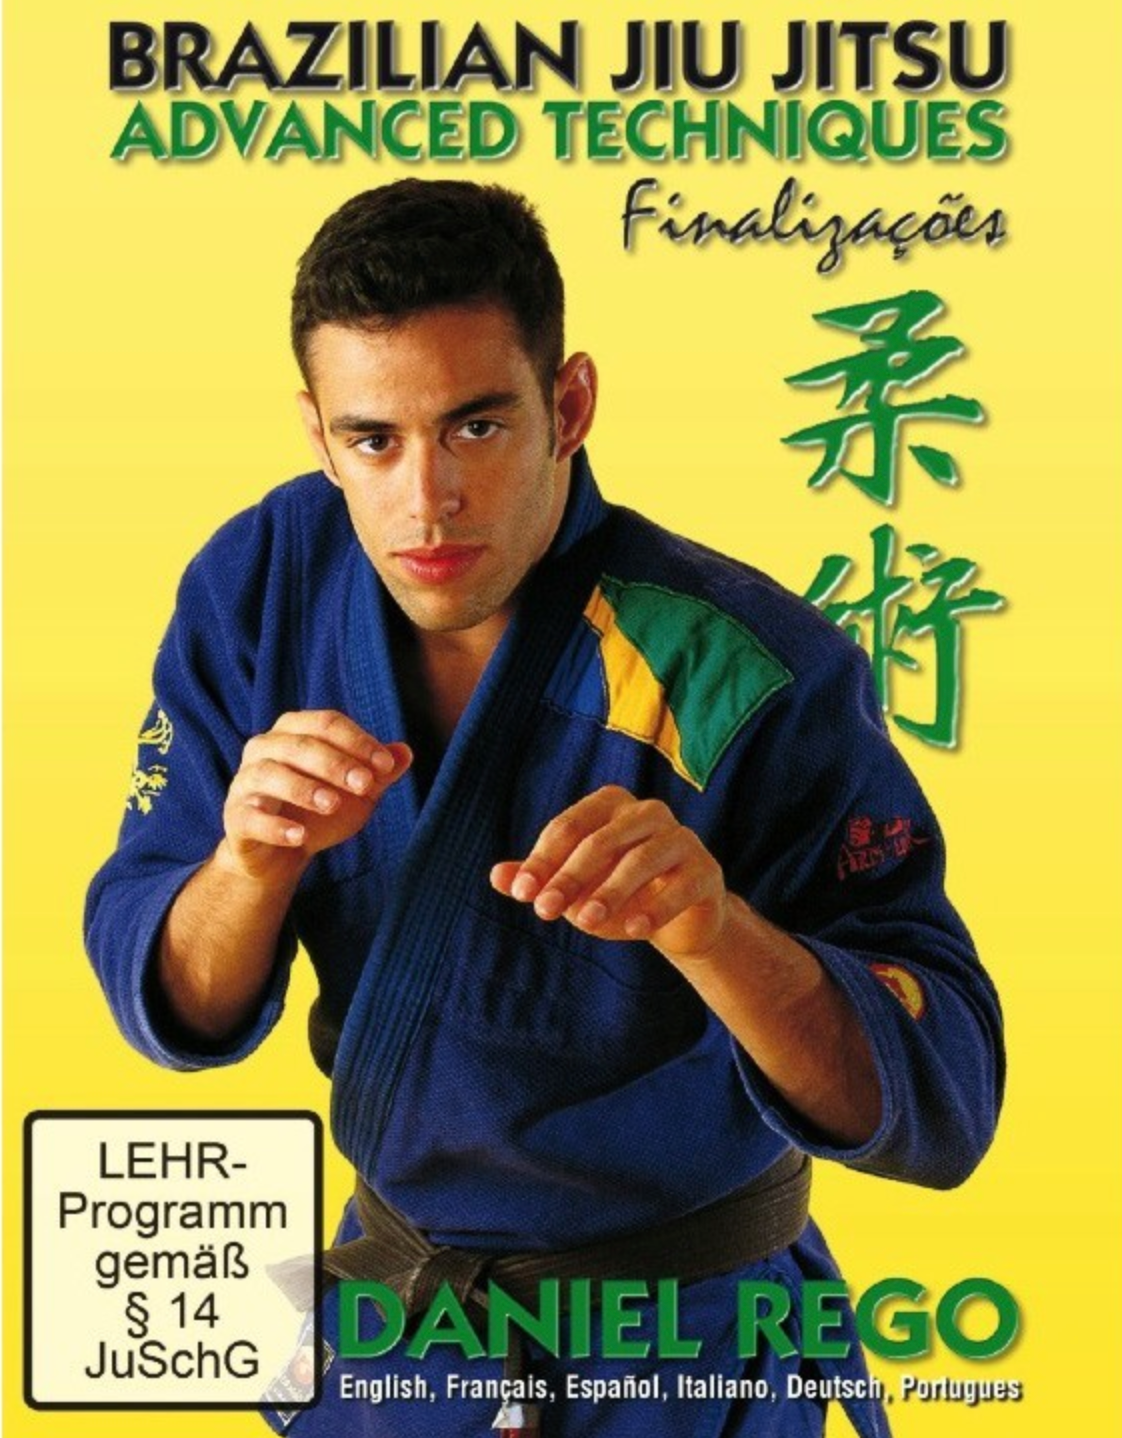 Brazilian Jiu Jitsu Advanced Techniques Vol 2 Submissions DVD with Daniel Rego - Budovideos Inc